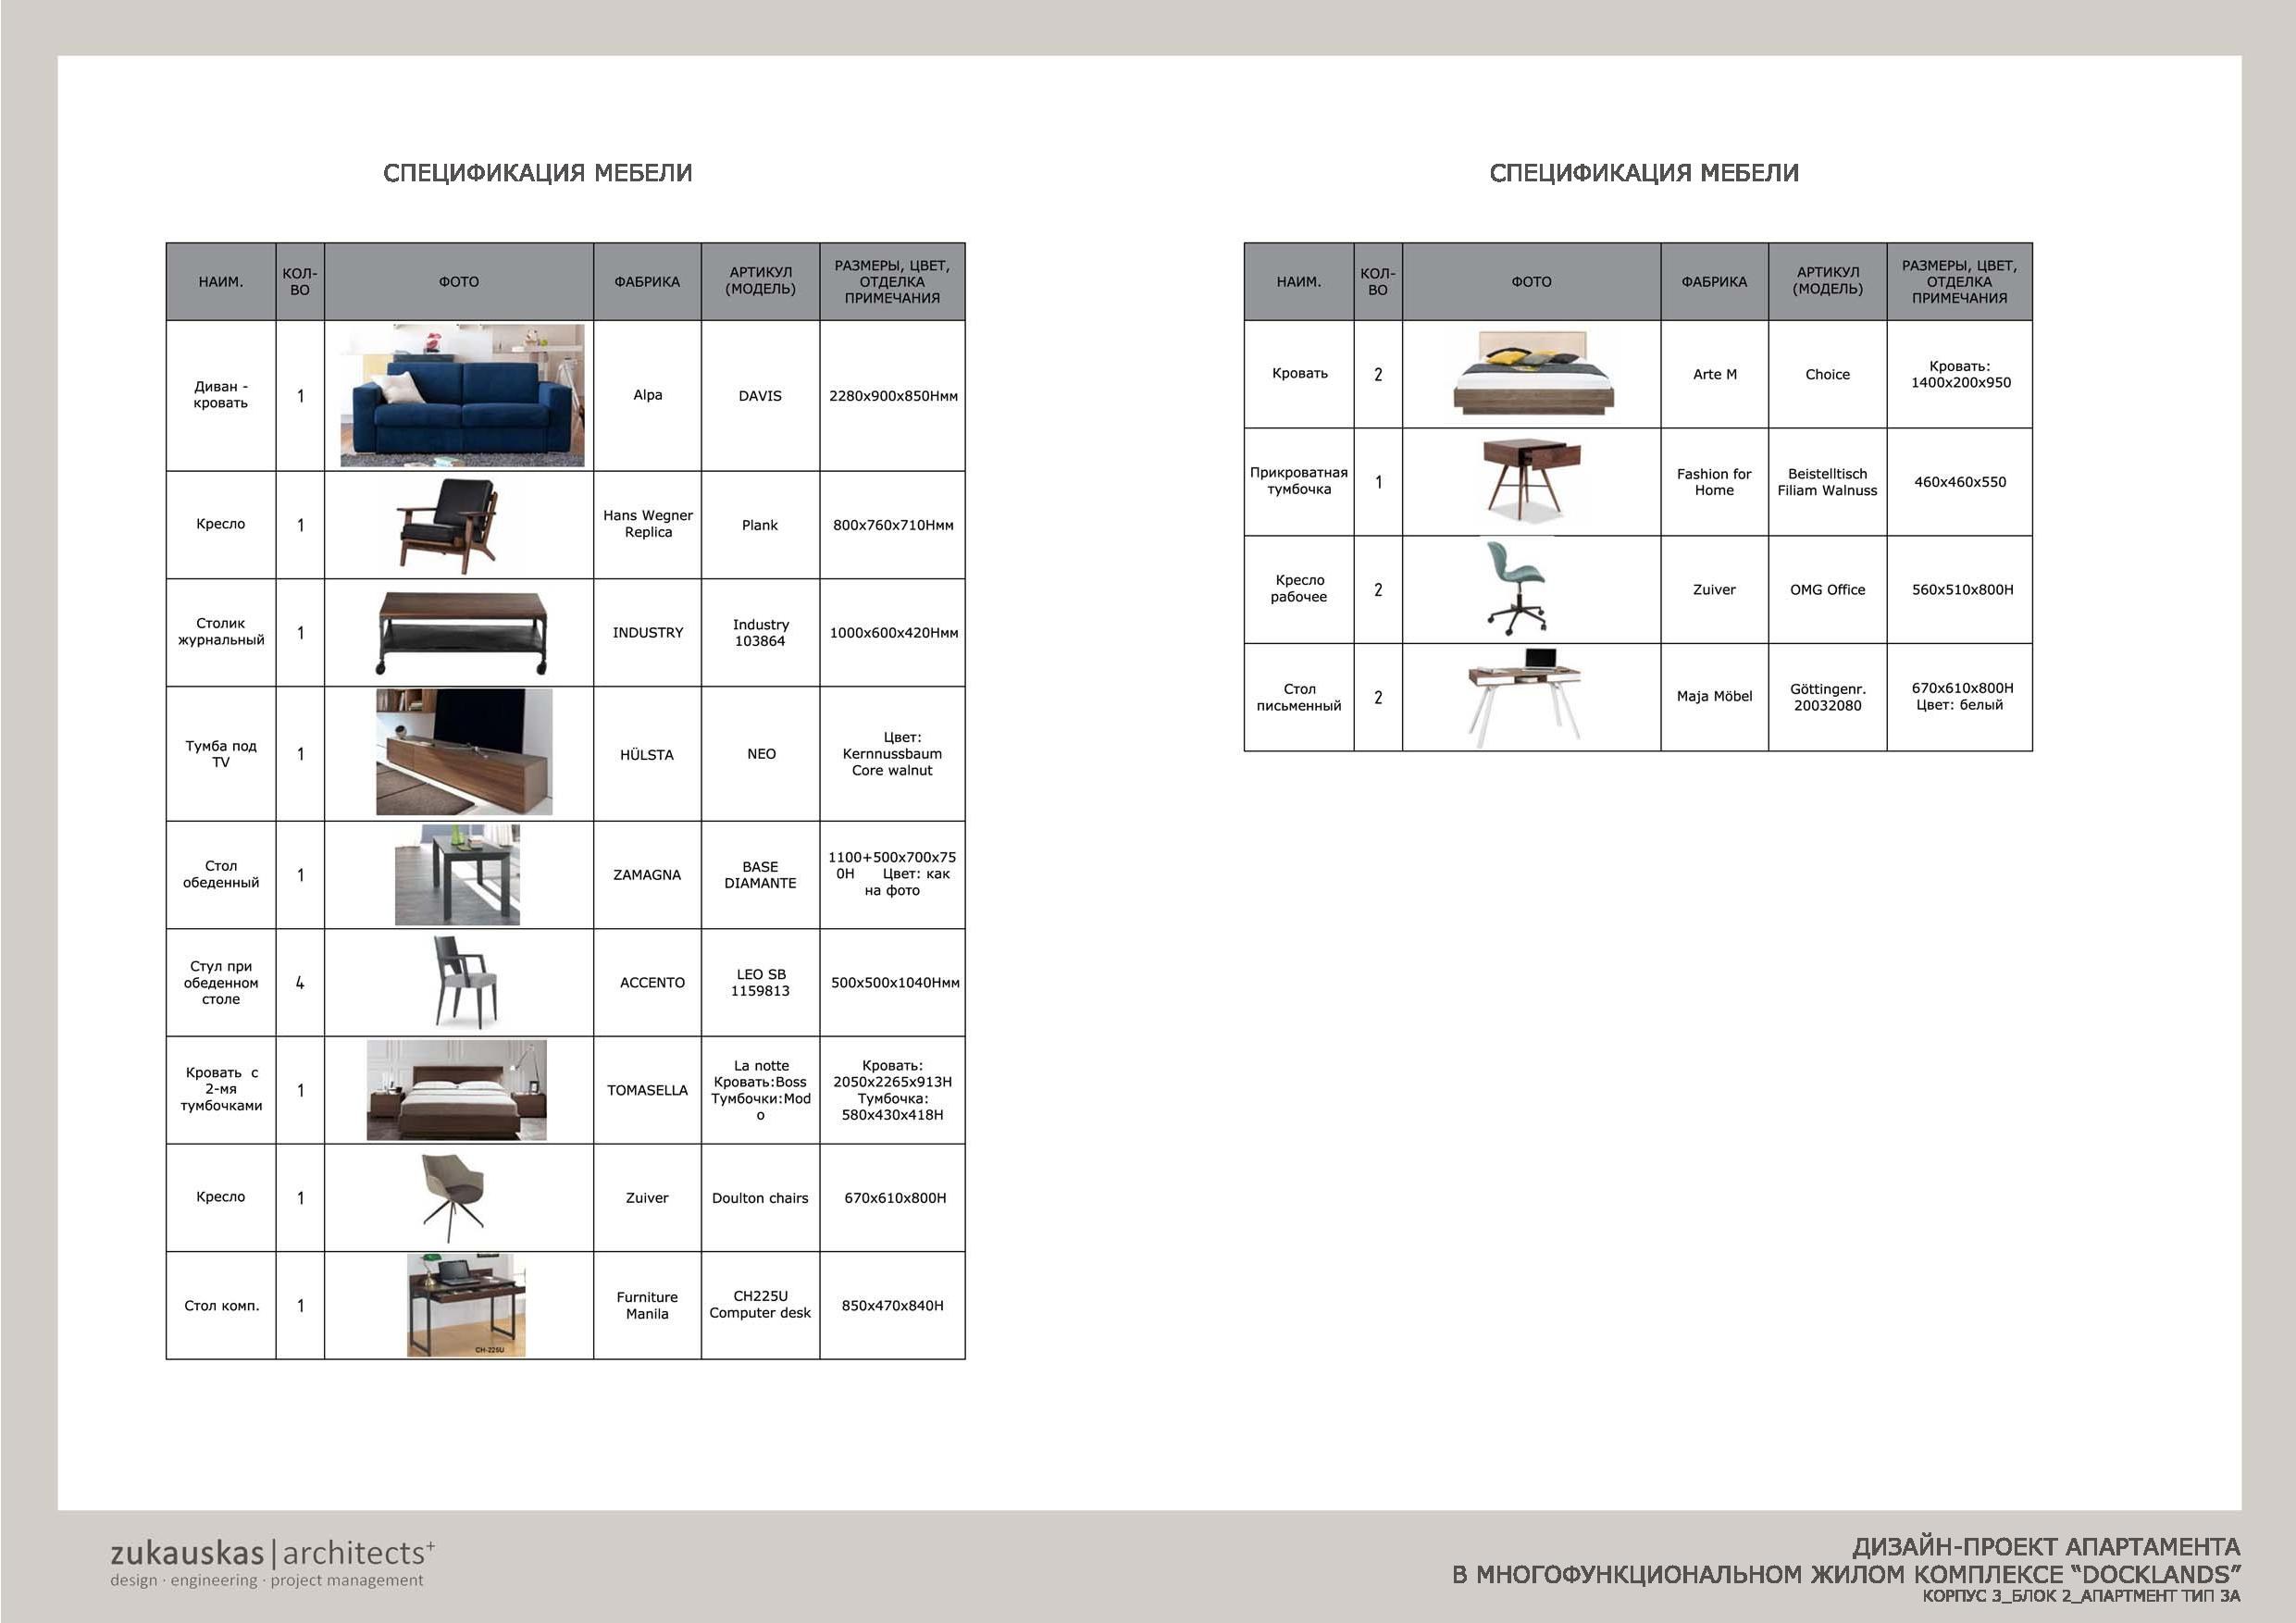 Спецификация мебели образец заполнения